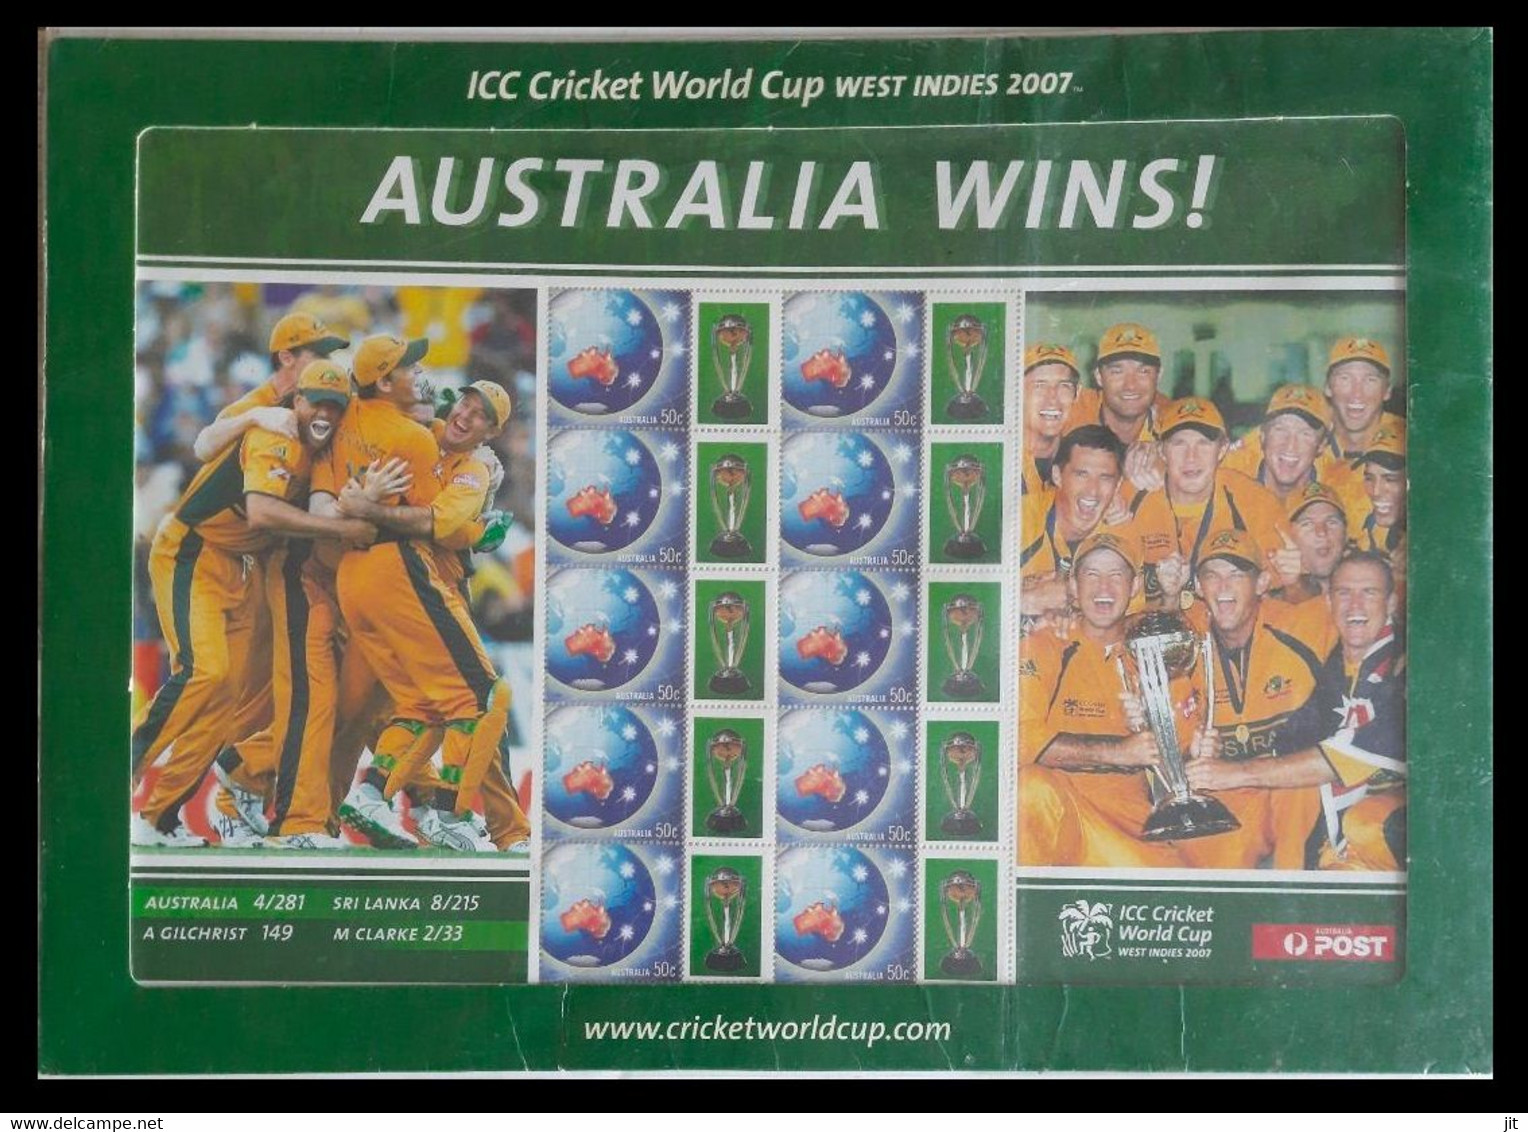 166. AUSTRALIA 2007 STAMP SHEET AUSTRALIA WINS !! ICC CRICKET WORLD CUP .MNH - Sheets, Plate Blocks &  Multiples